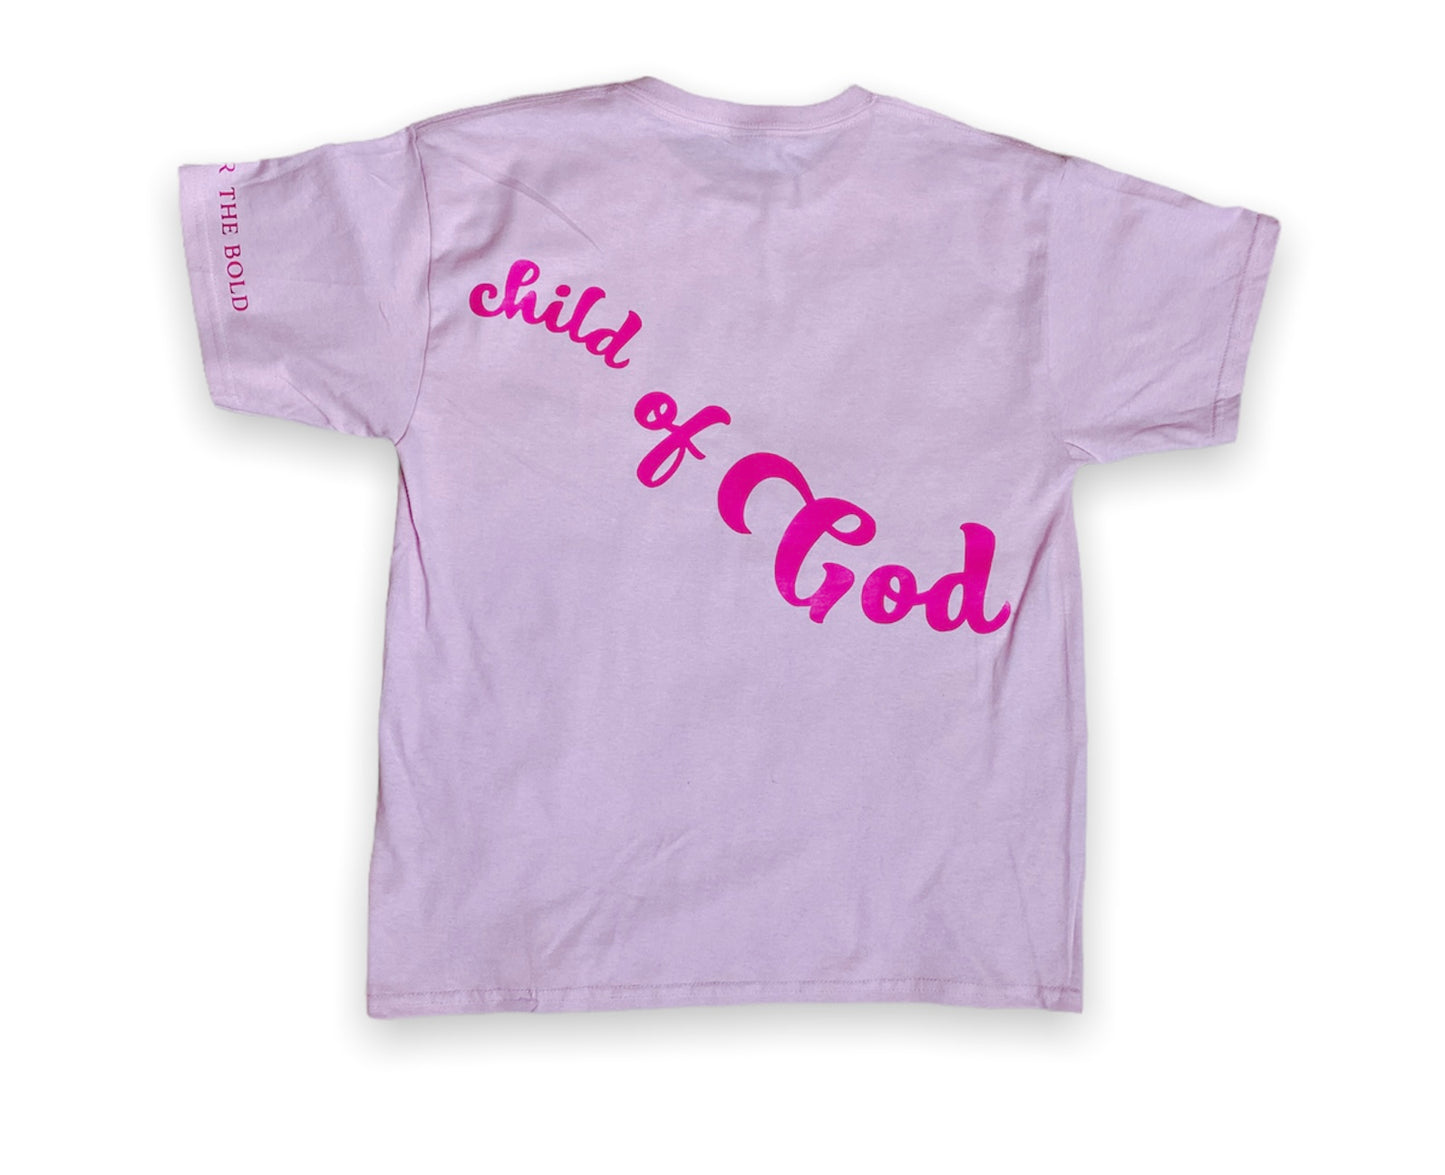 Child of God - Girls